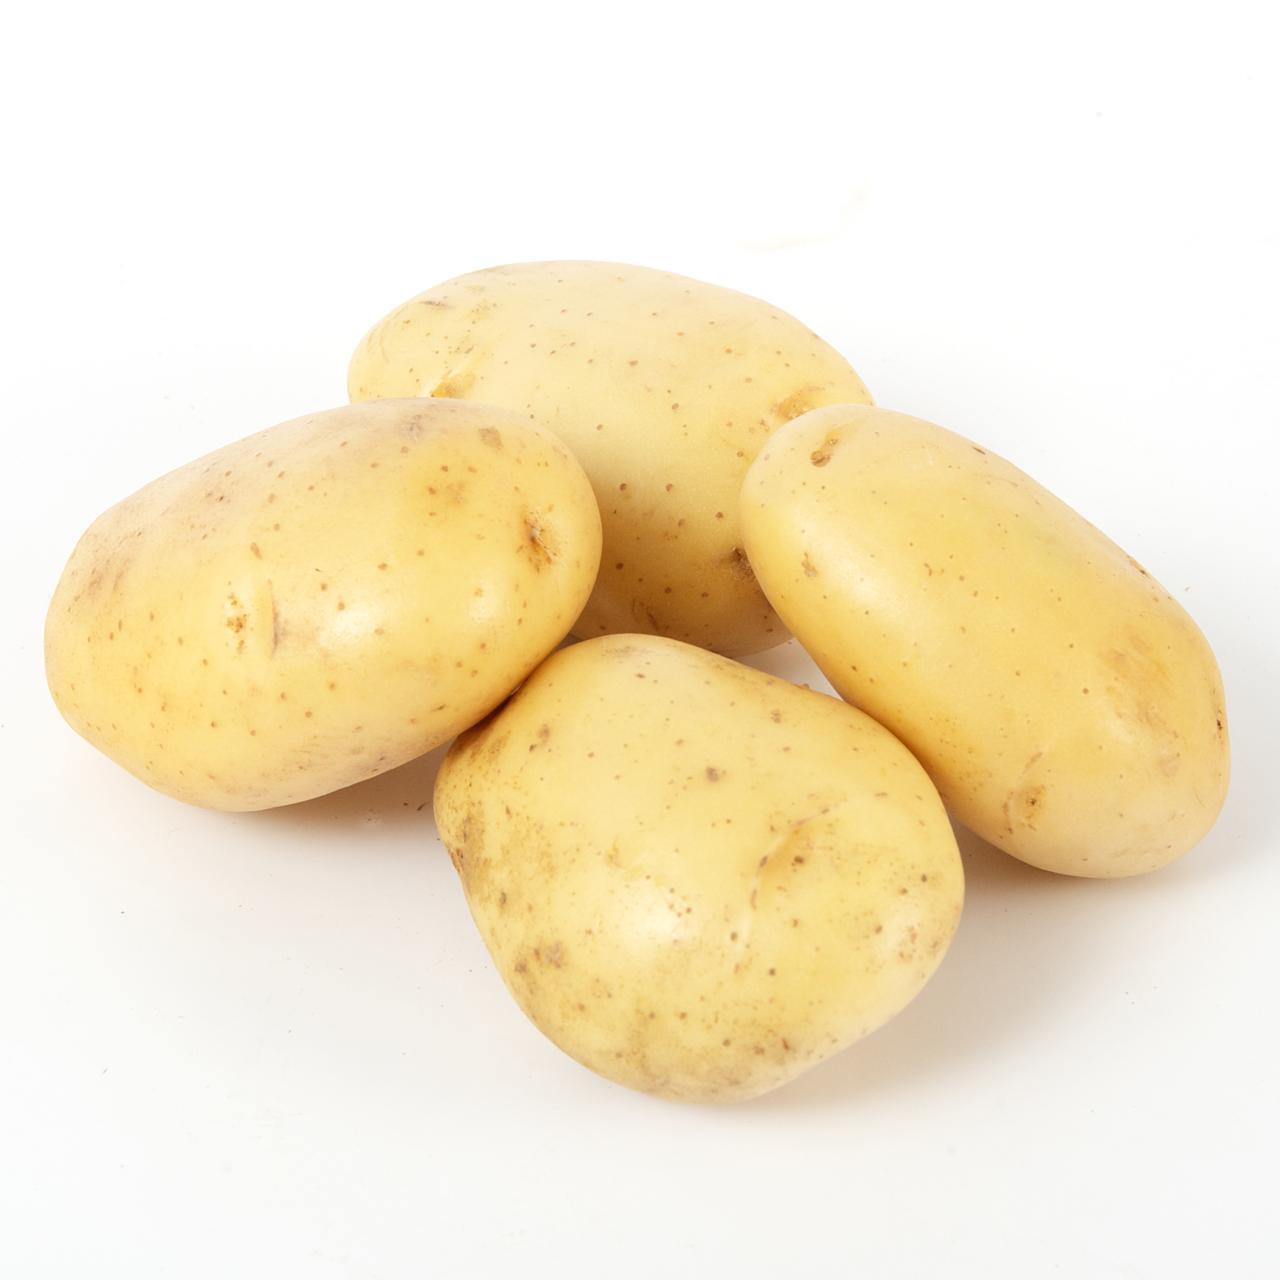 Ocado Organic Baking Potatoes 1.2kg